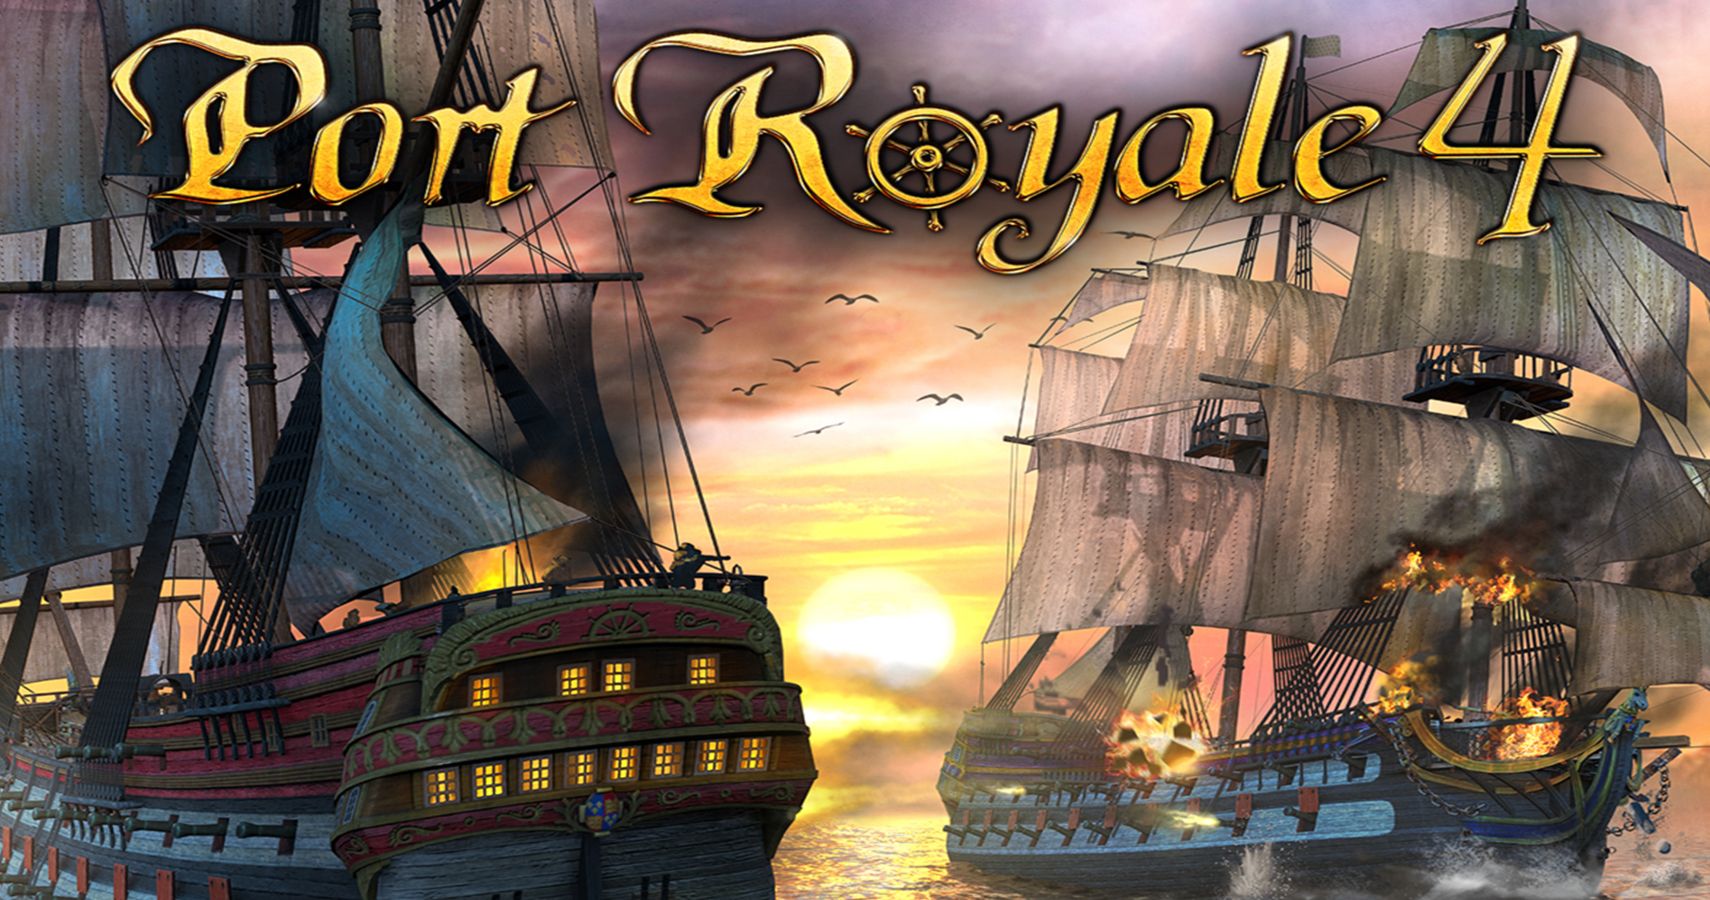 port royale 4 change language to english